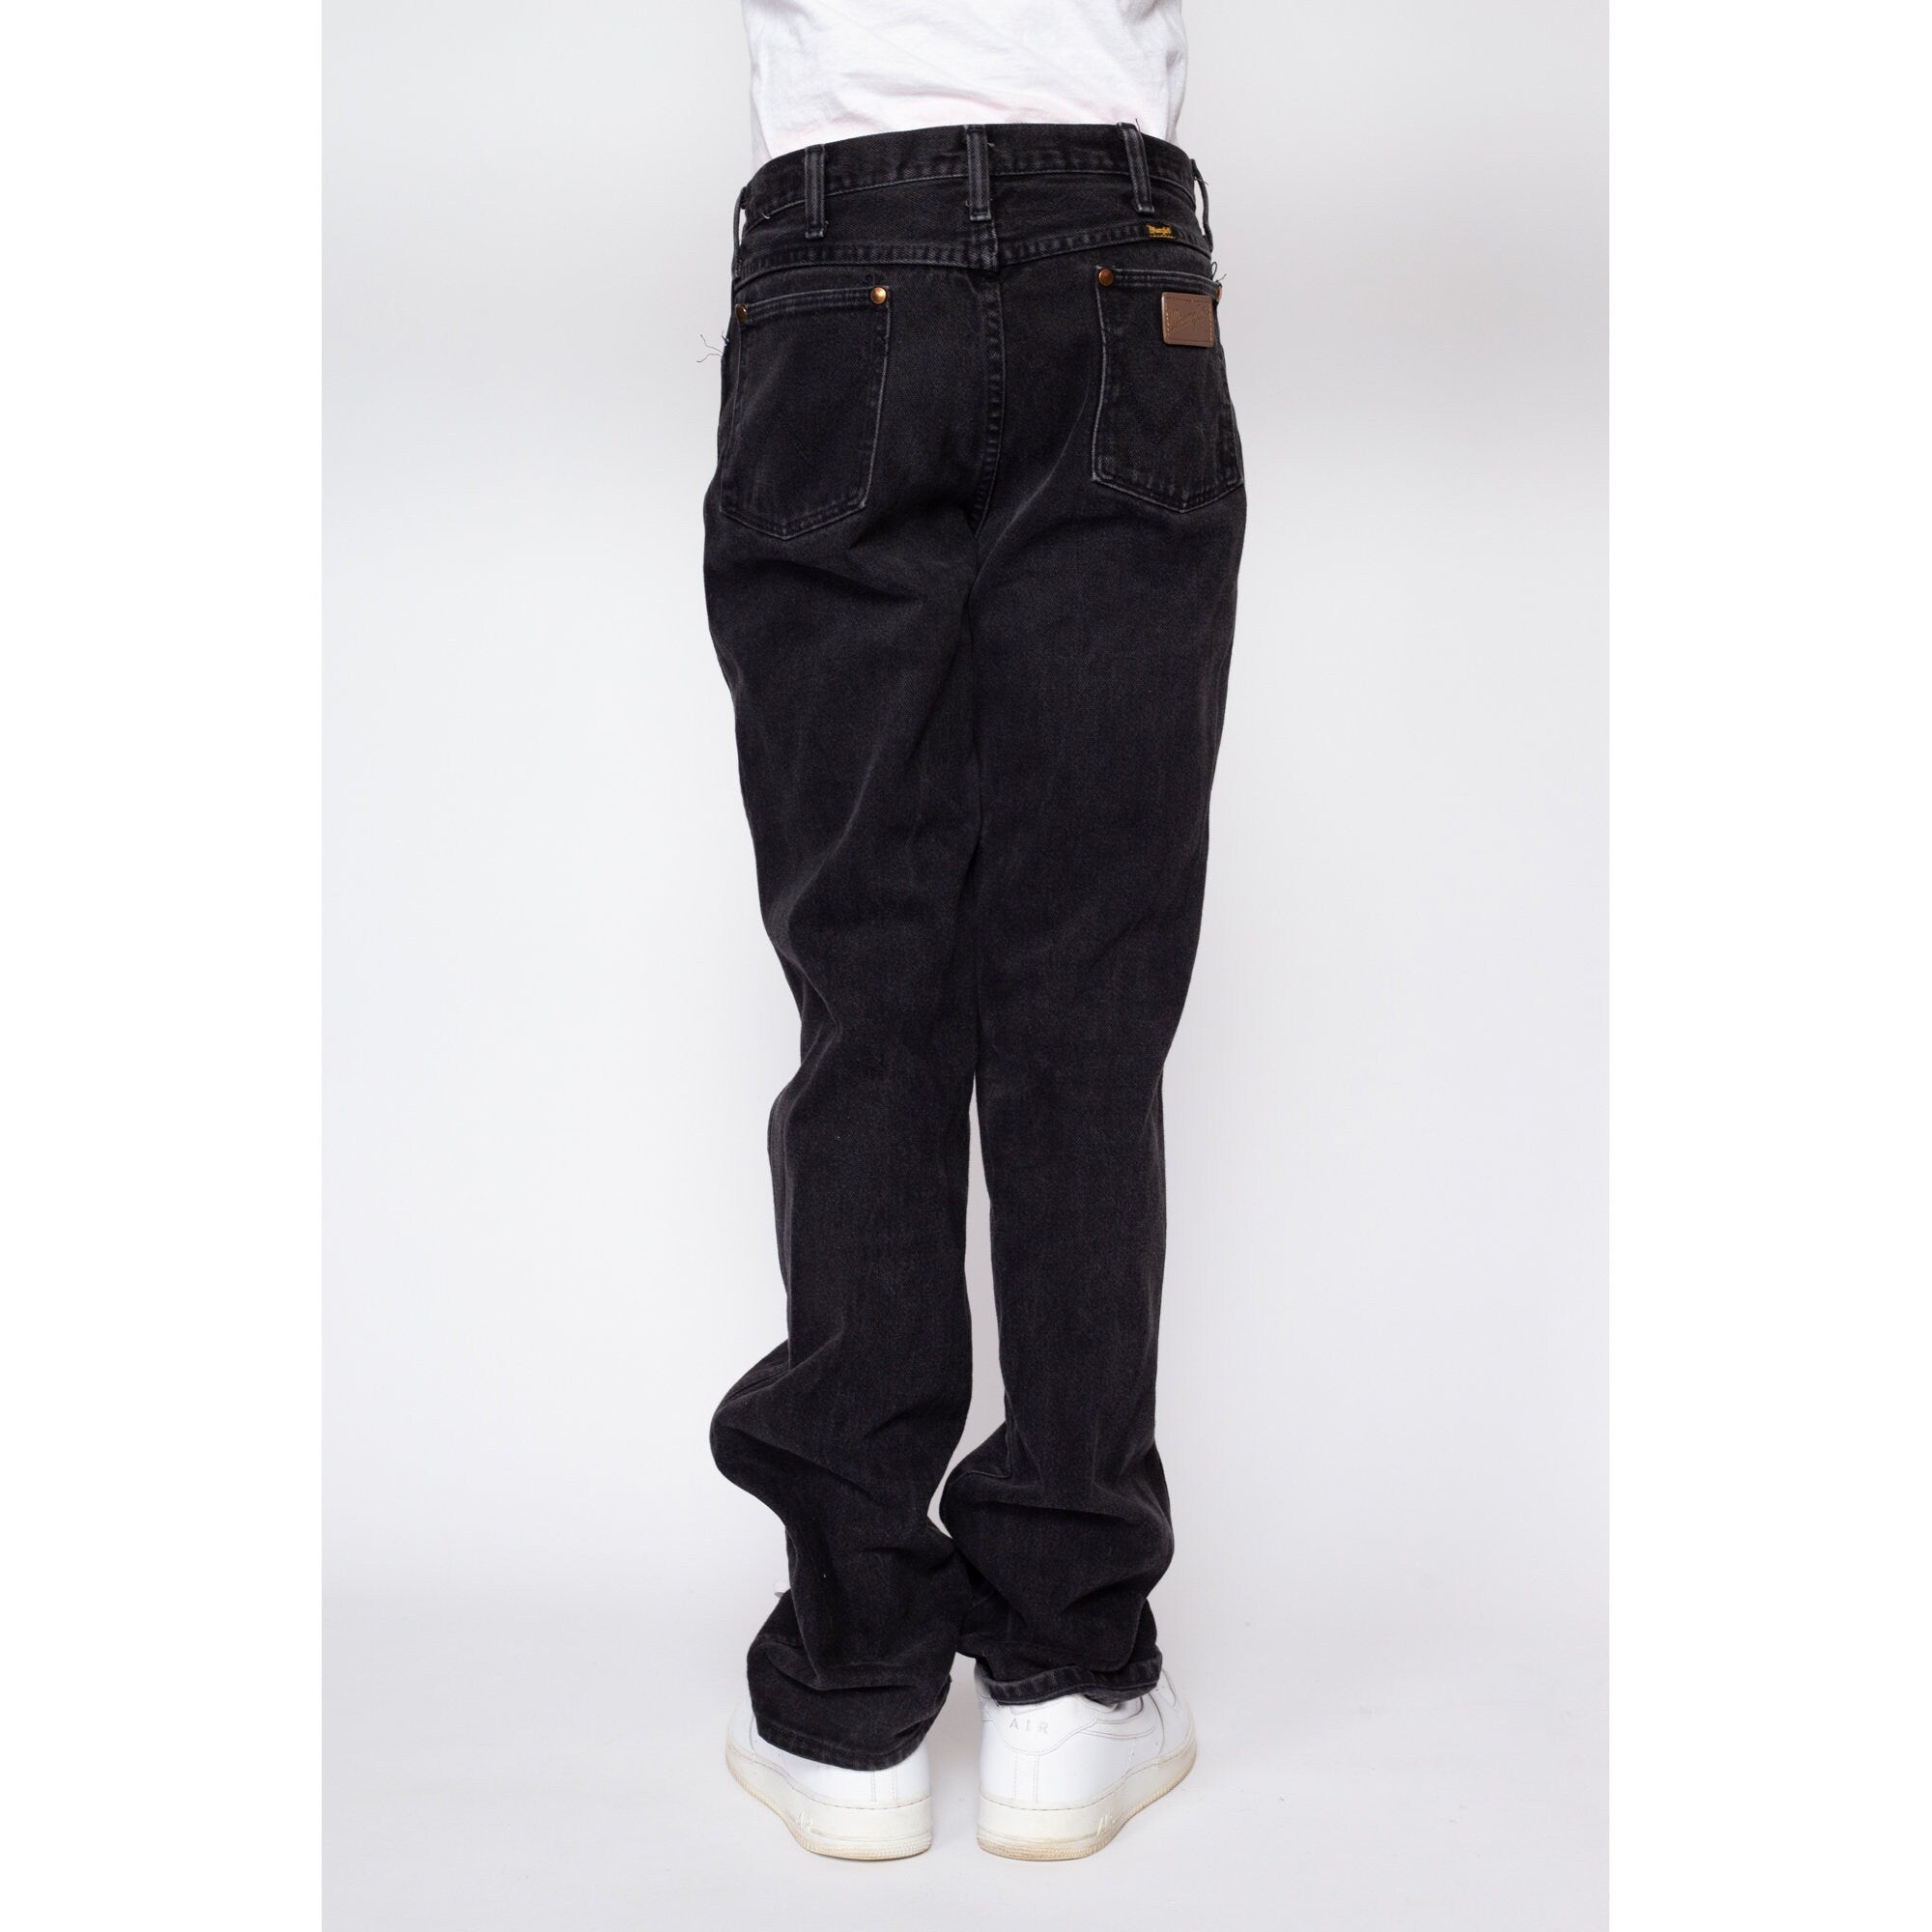 Wrangler Black Cotton Skinny Fit Jeans